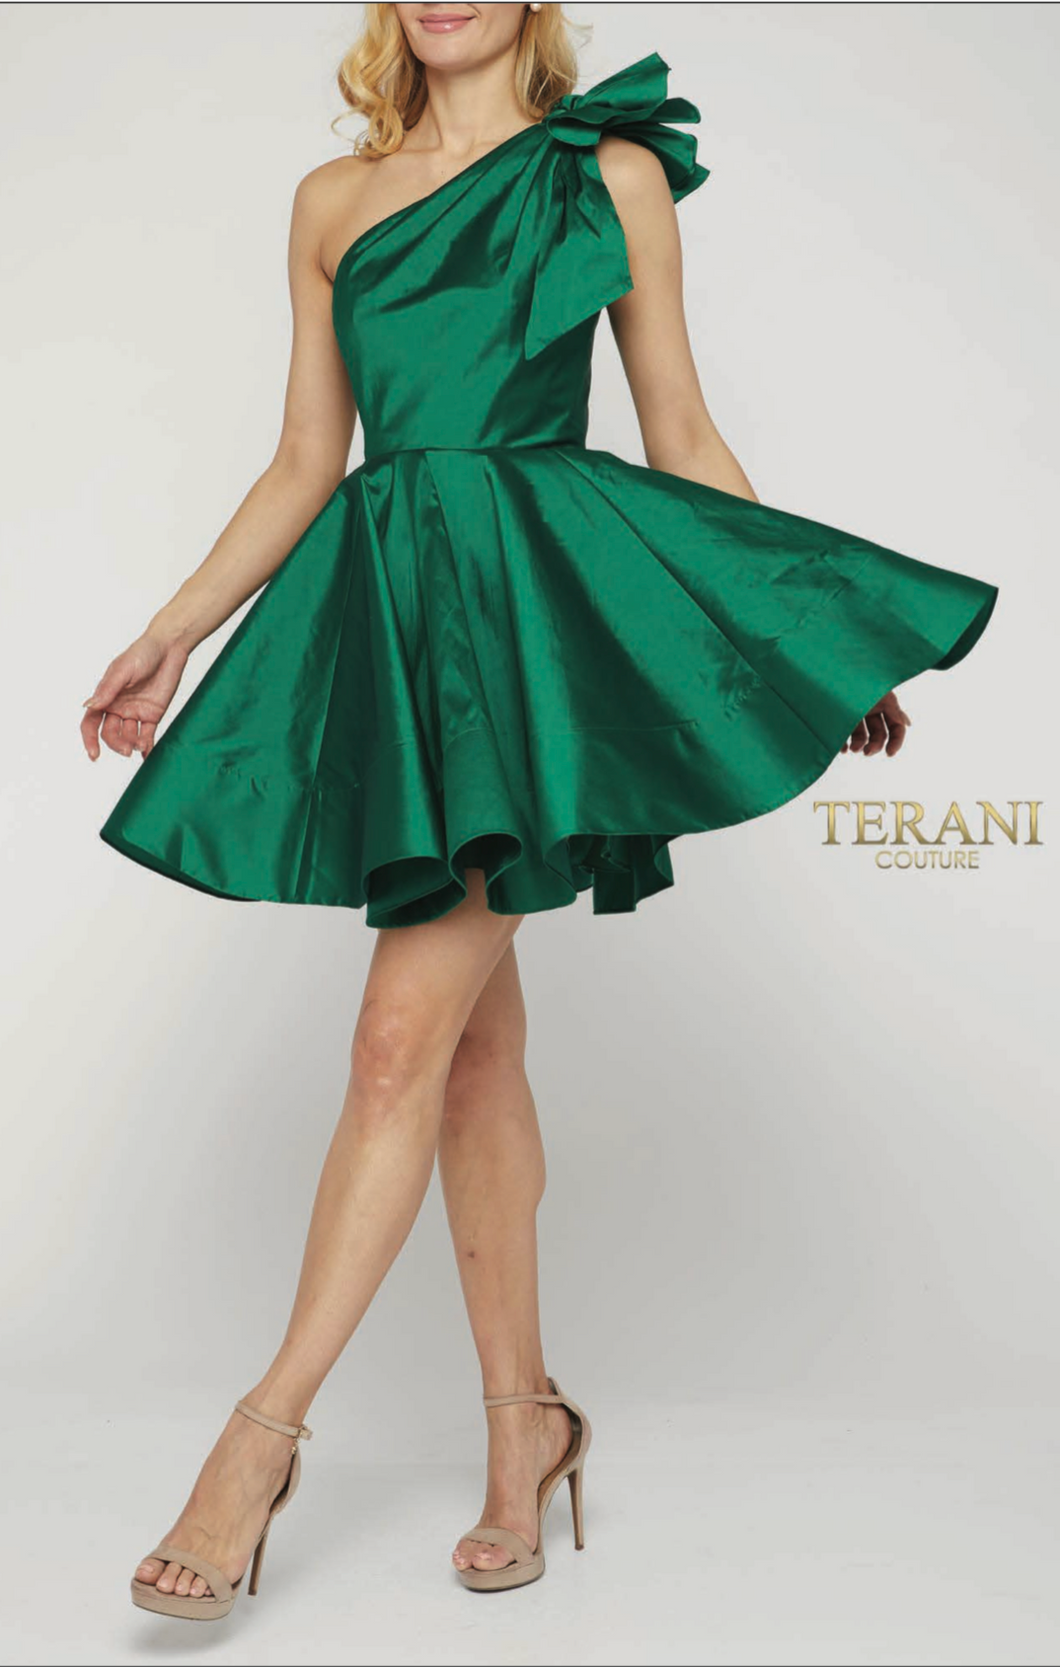 Terani Couture 2012p1255